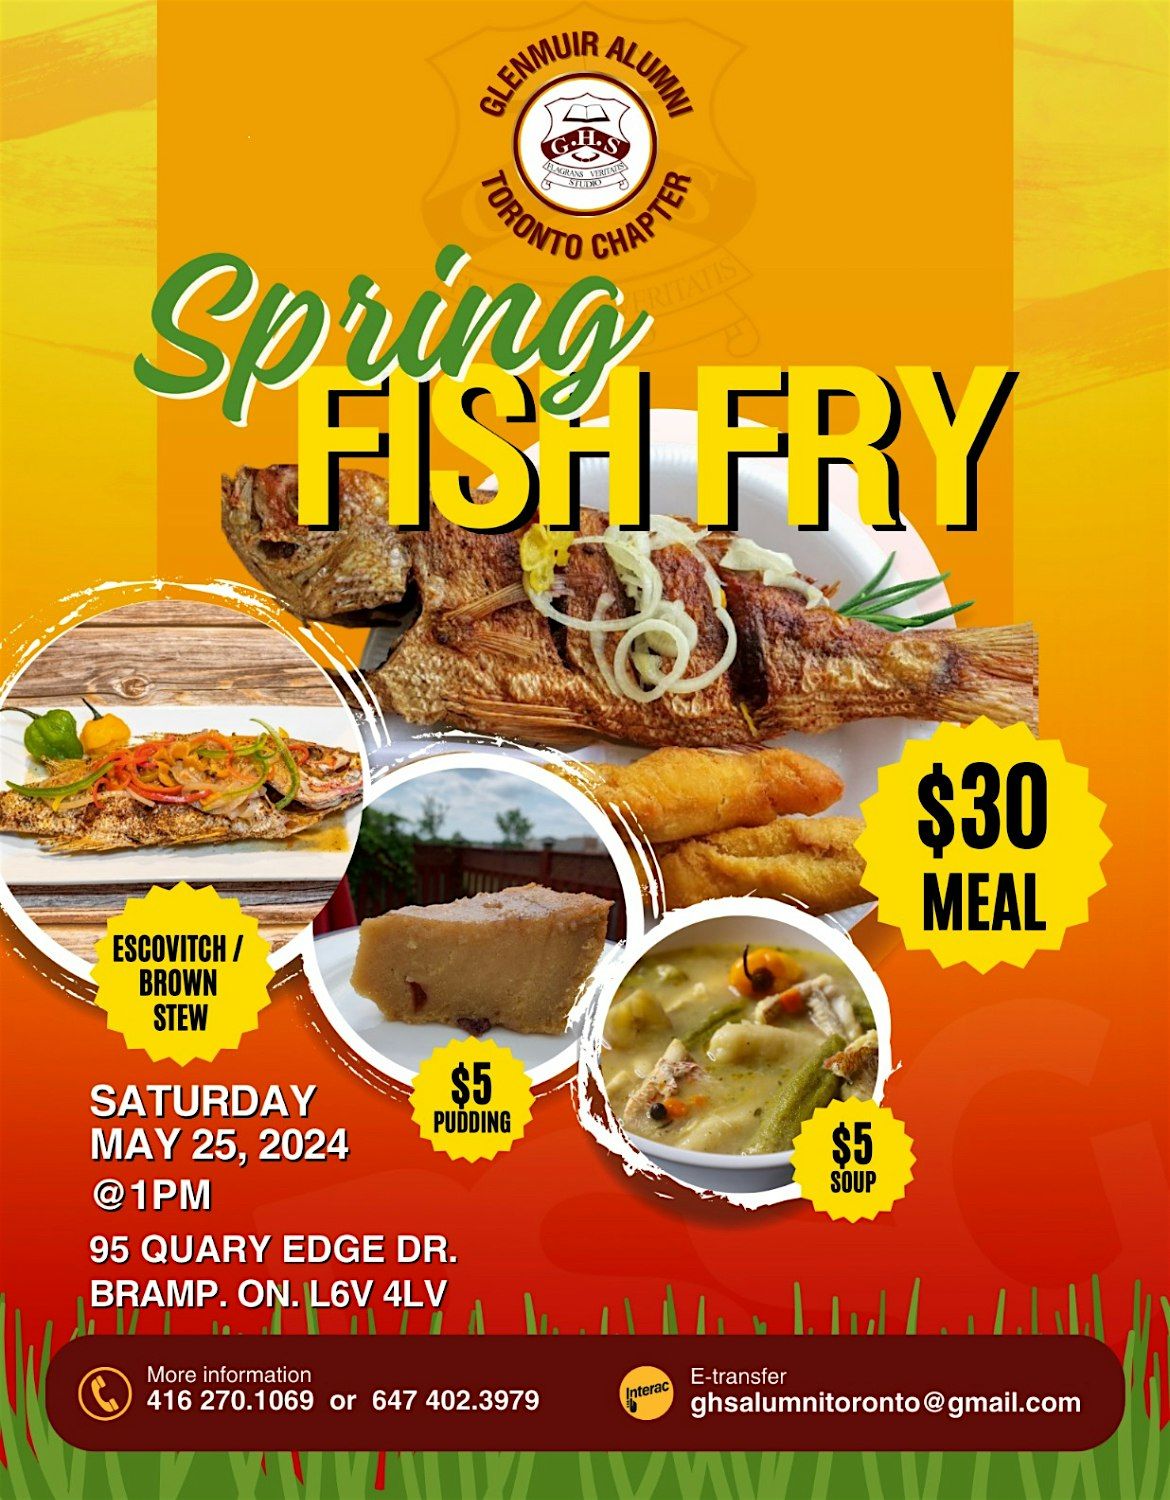 Glenmuir High School PSA Toronto - Spring Fish Fry